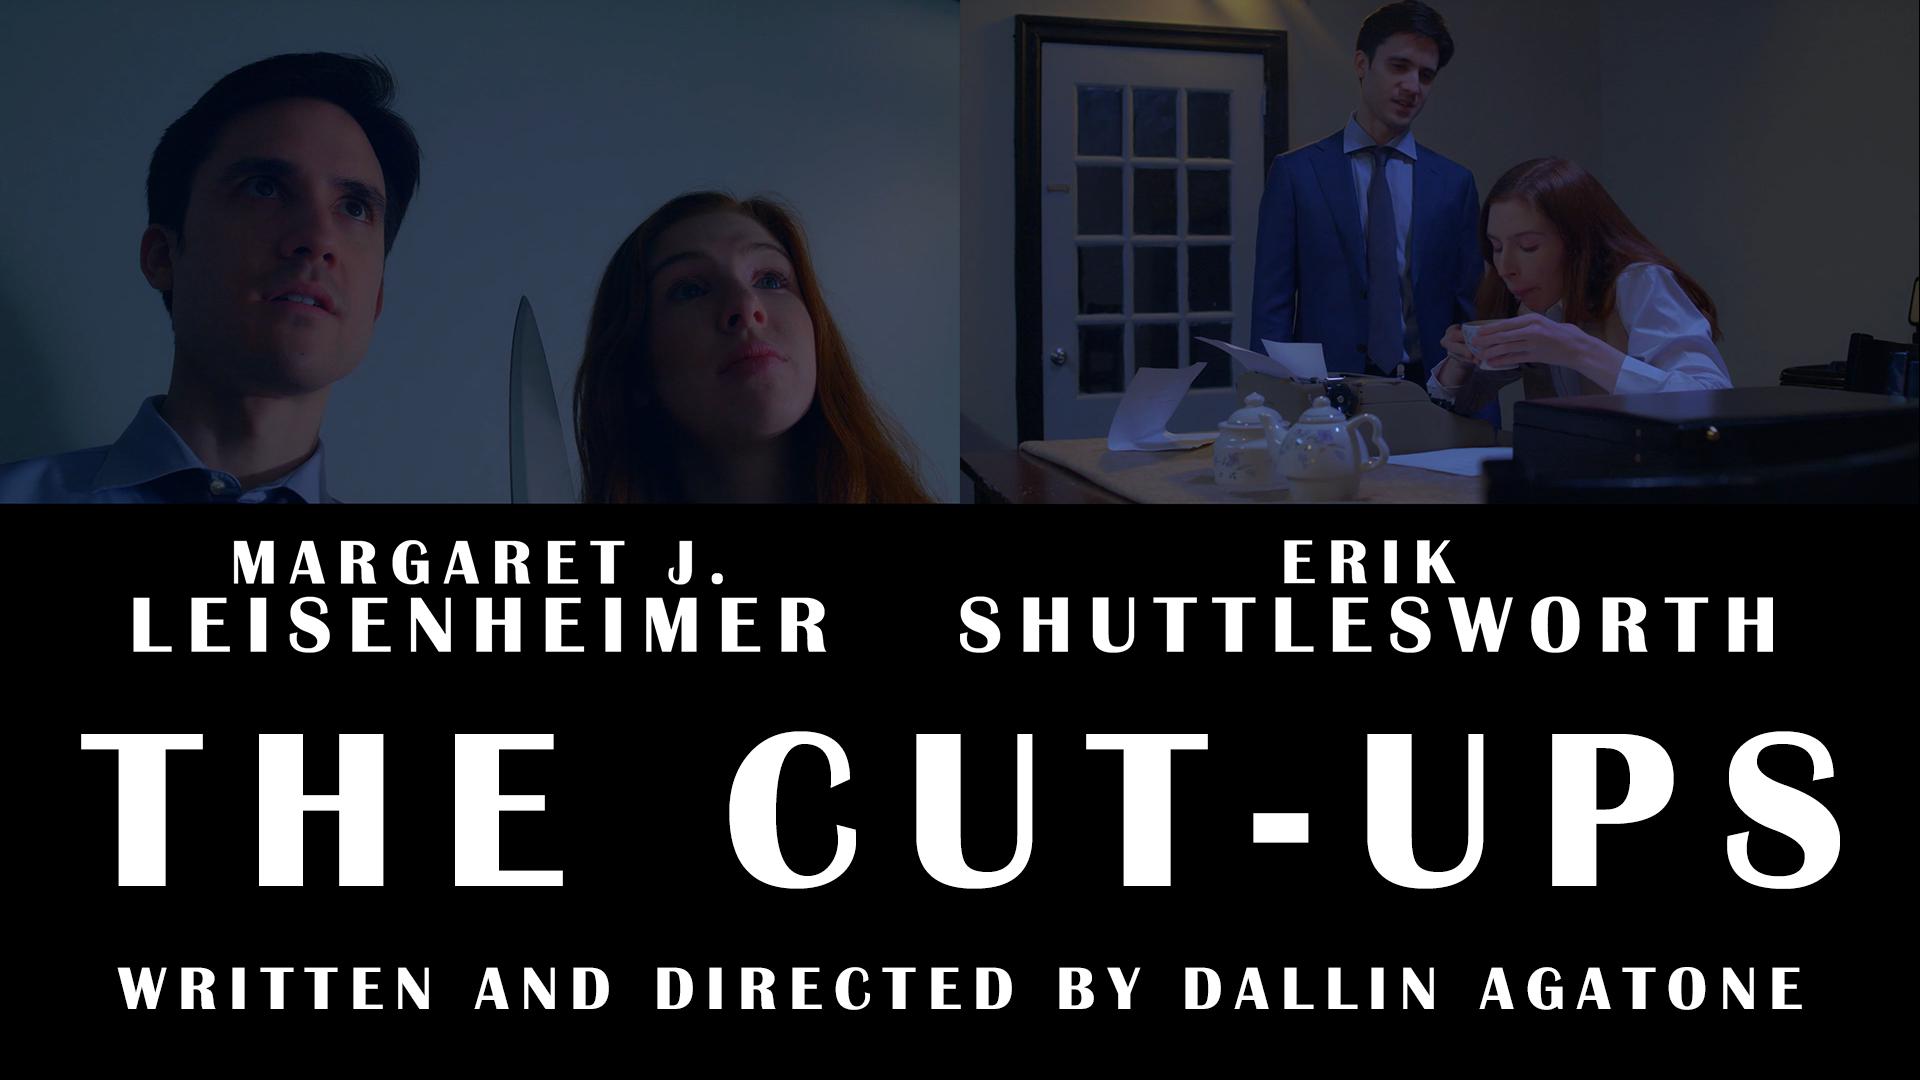 The Cut-Ups